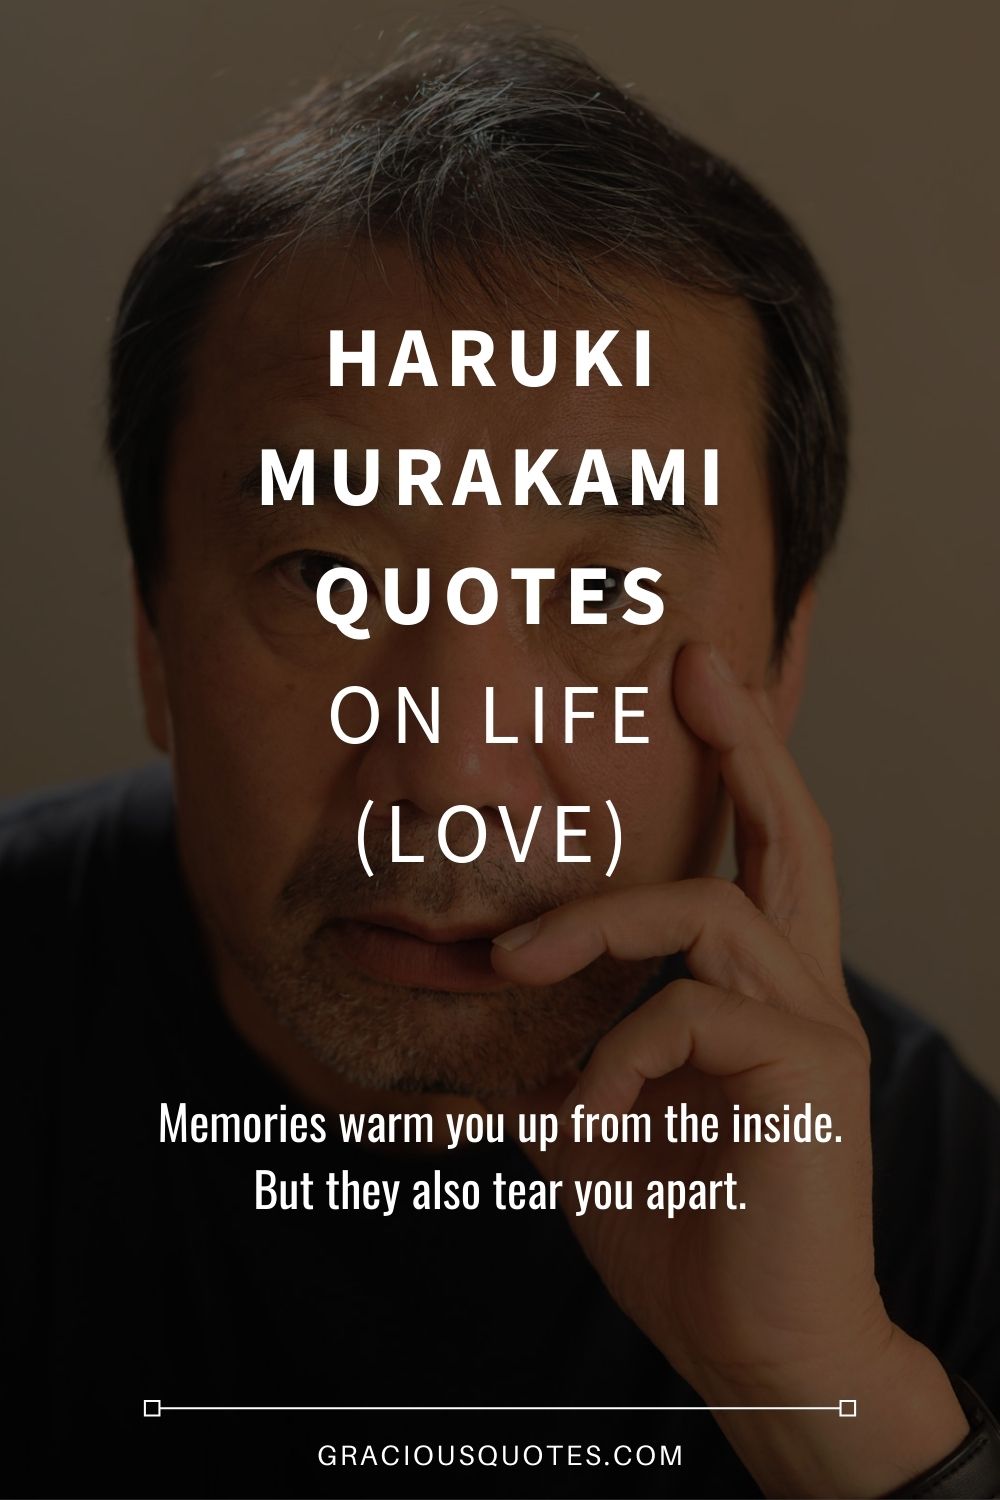 Haruki Murakami Quotes on Life (LOVE) - Gracious Quotes